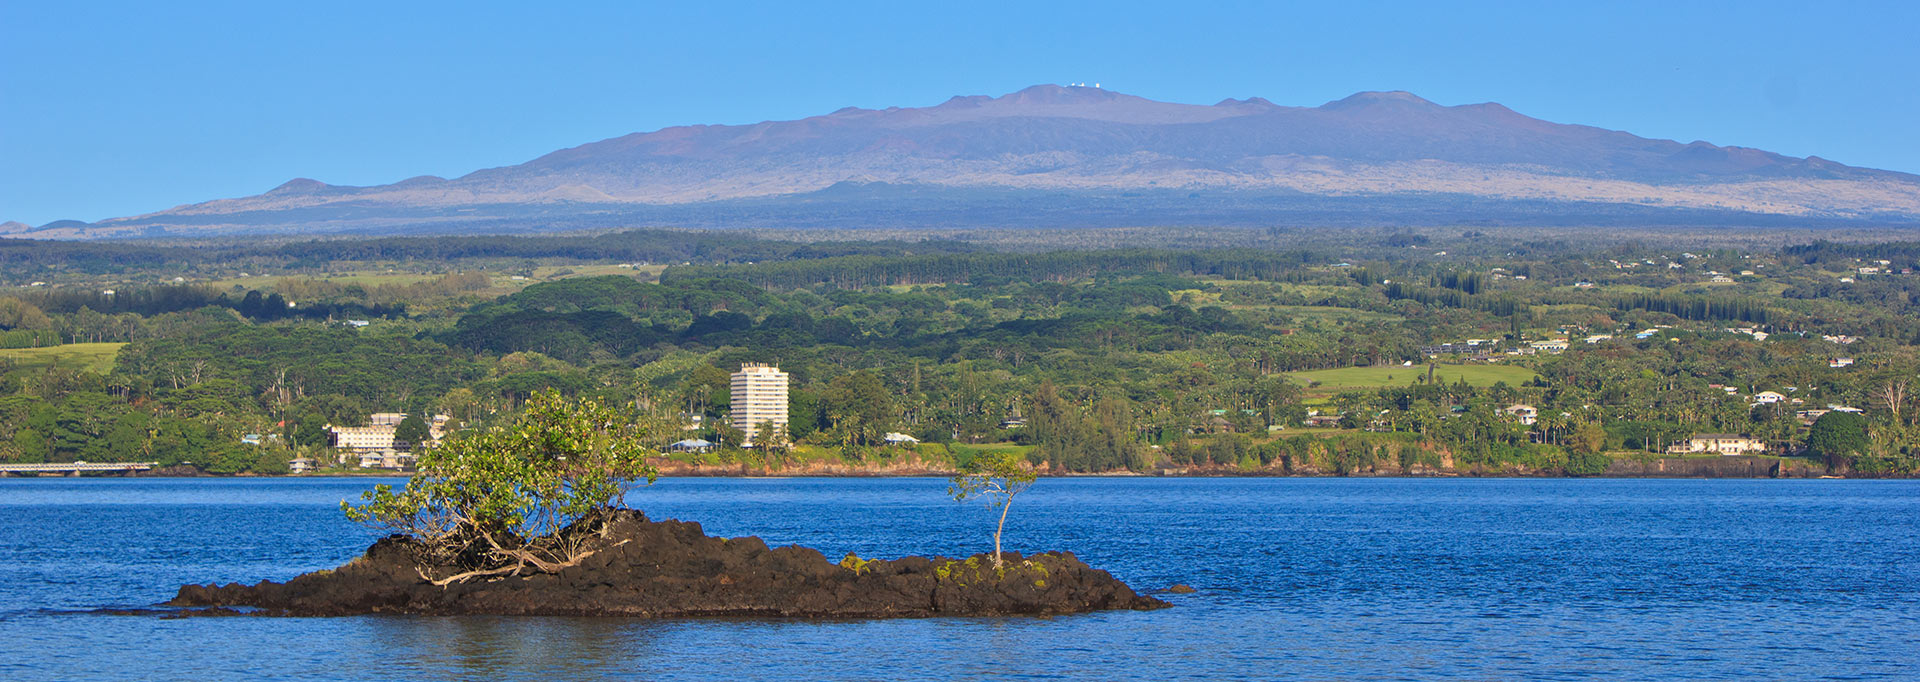 Beautiful Hilo, Hawaii with Mauna Kea in the background